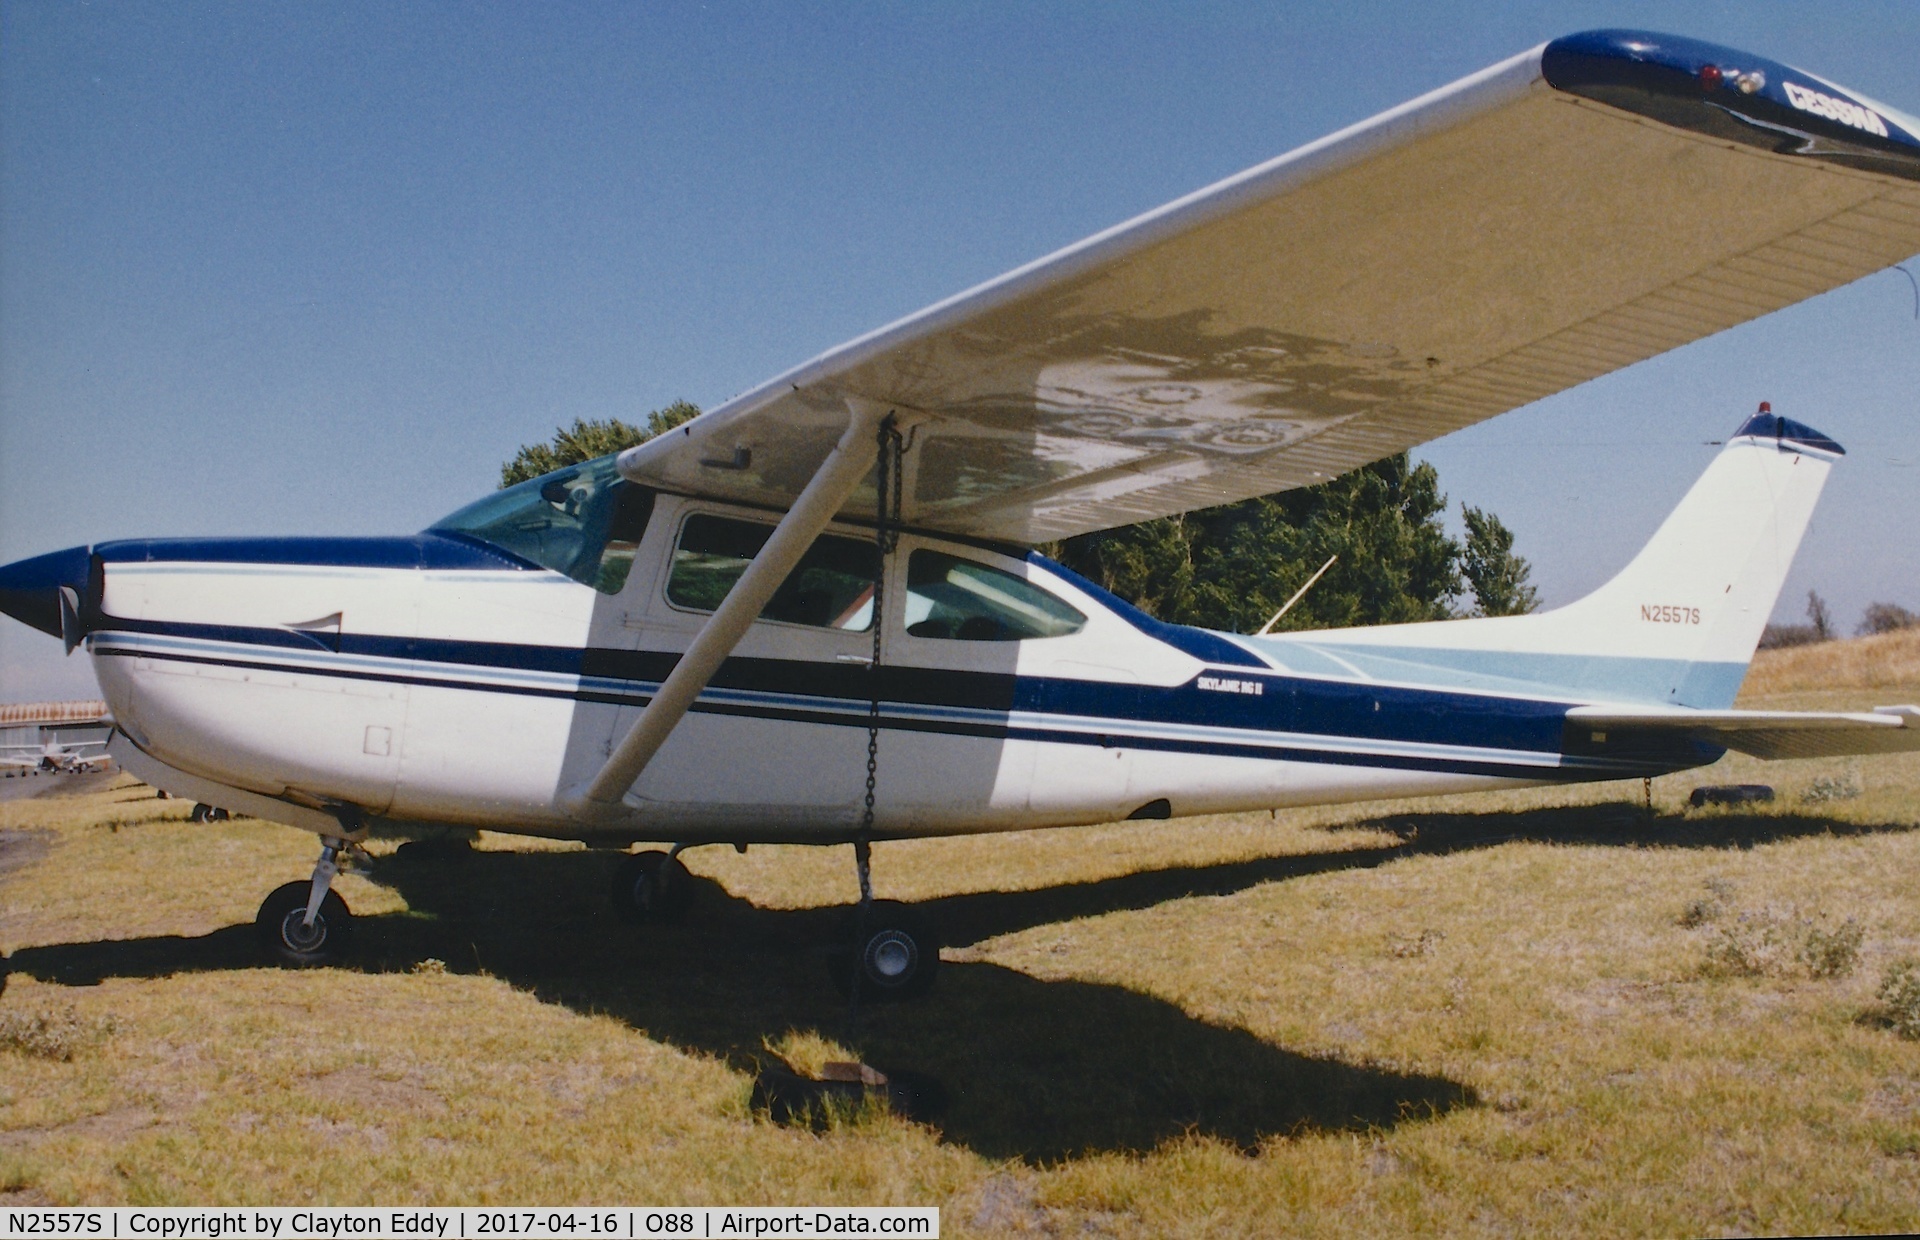 N2557S, Cessna TR182 Turbo Skylane RG C/N R18201349, Old Rio Vista Airport in California. Early 1980's?